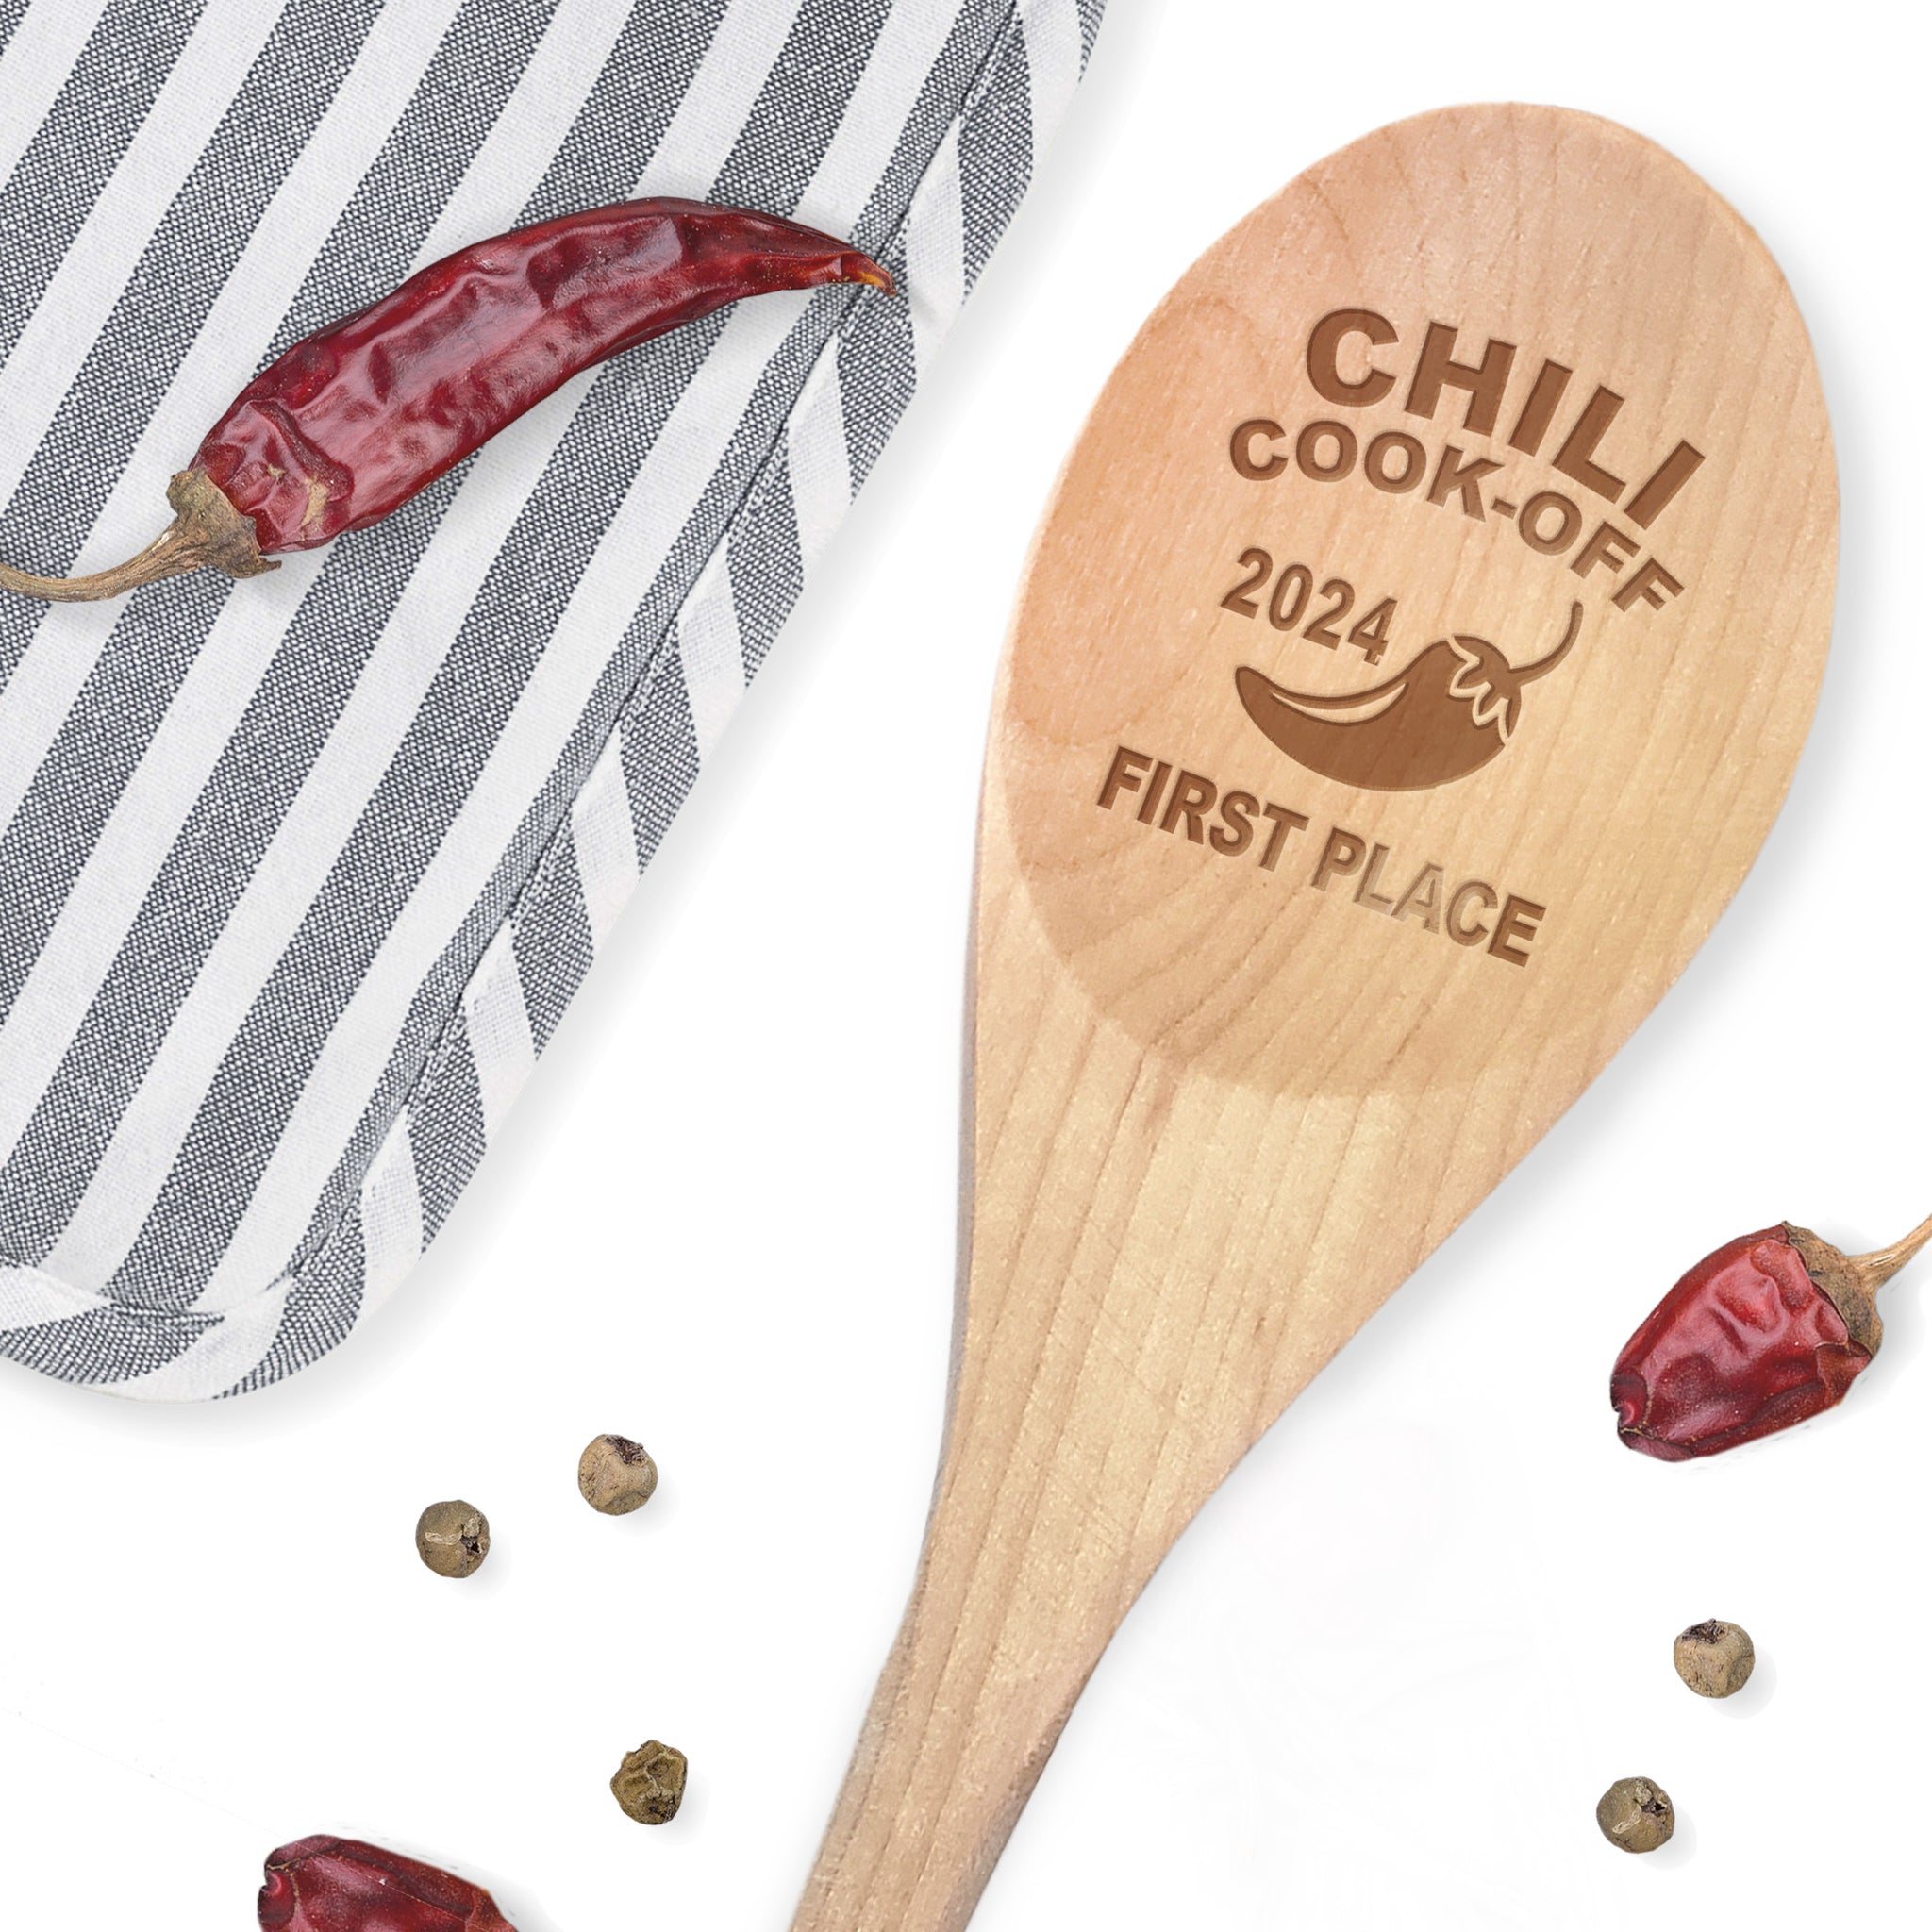 Chili Pepper Cookie Cutter/Dishwasher safe